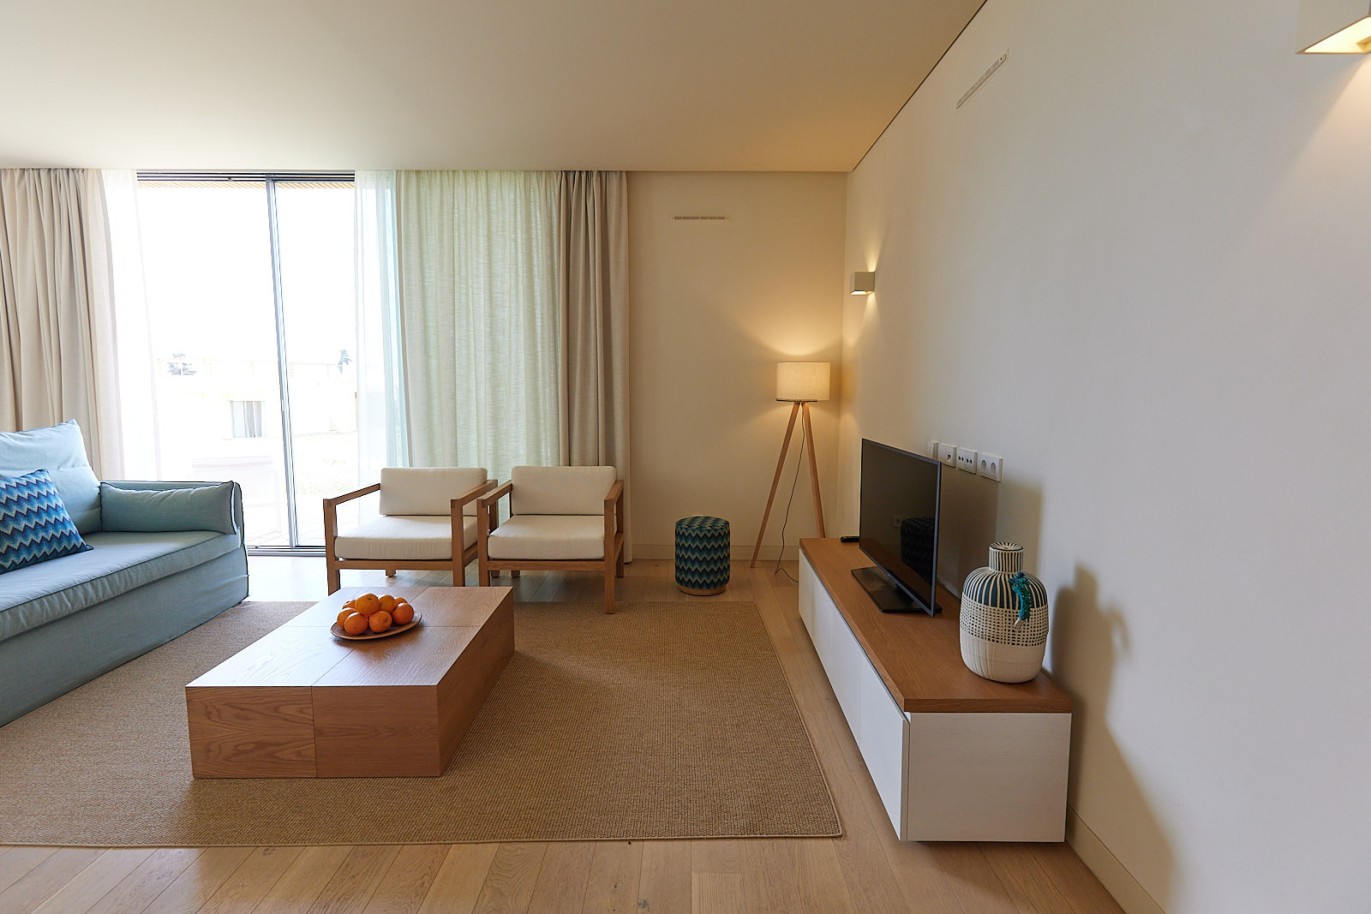 2 bedroom apartment in resort, for sale in Porches, Algarve_230496